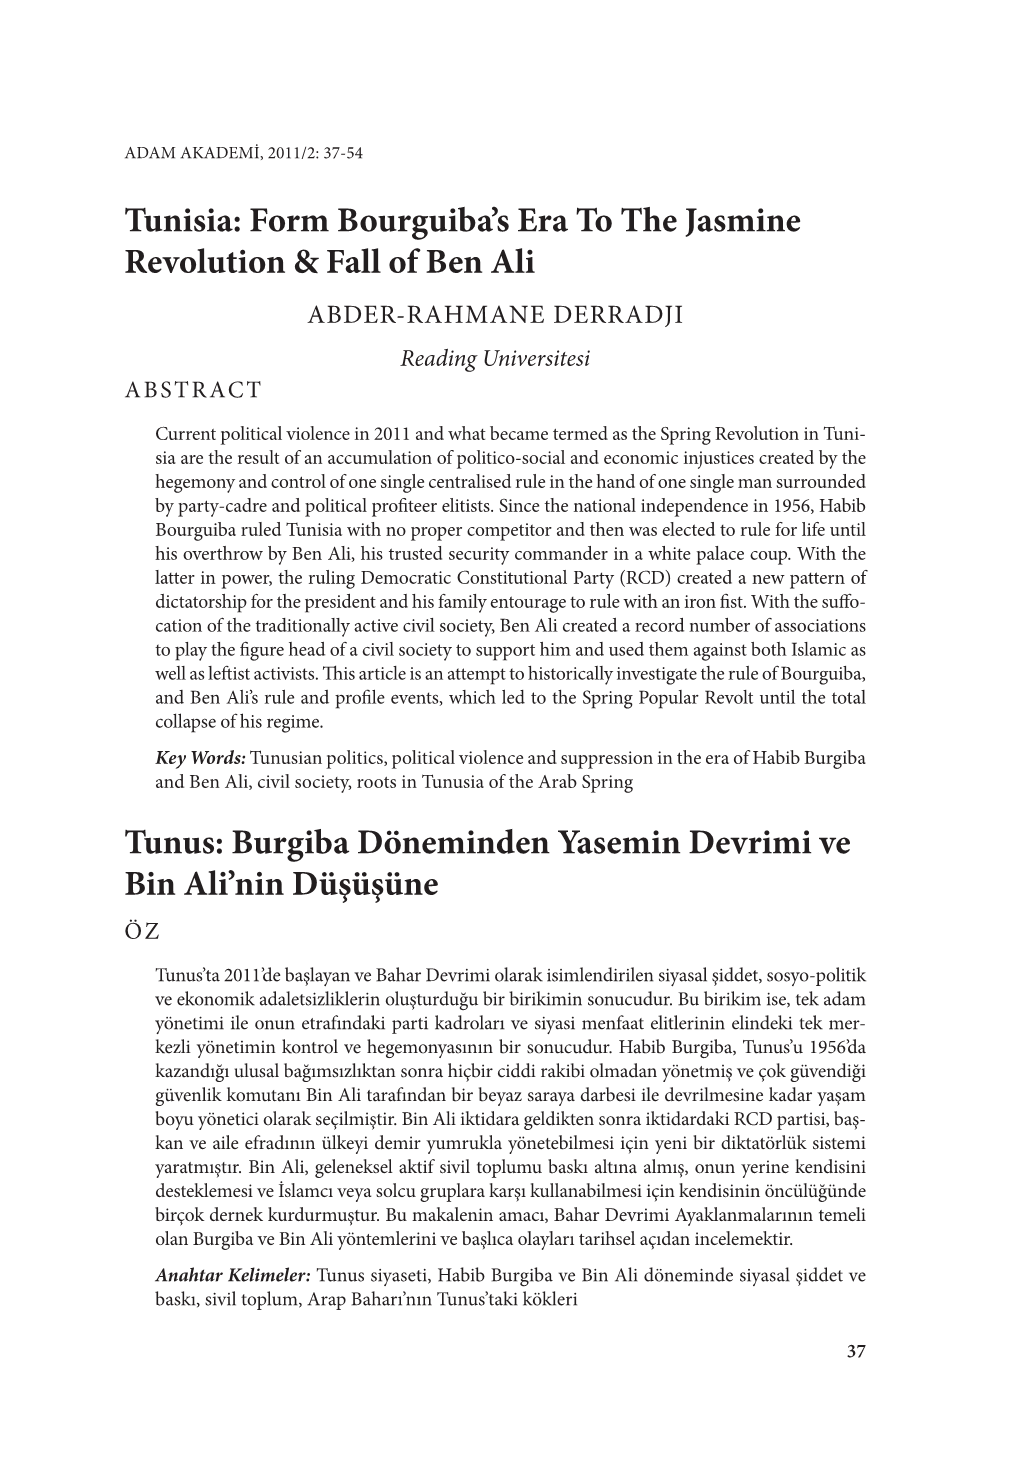 Form Bourguiba's Era to the Jasmine Revolution & Fall of Ben Ali Tunus